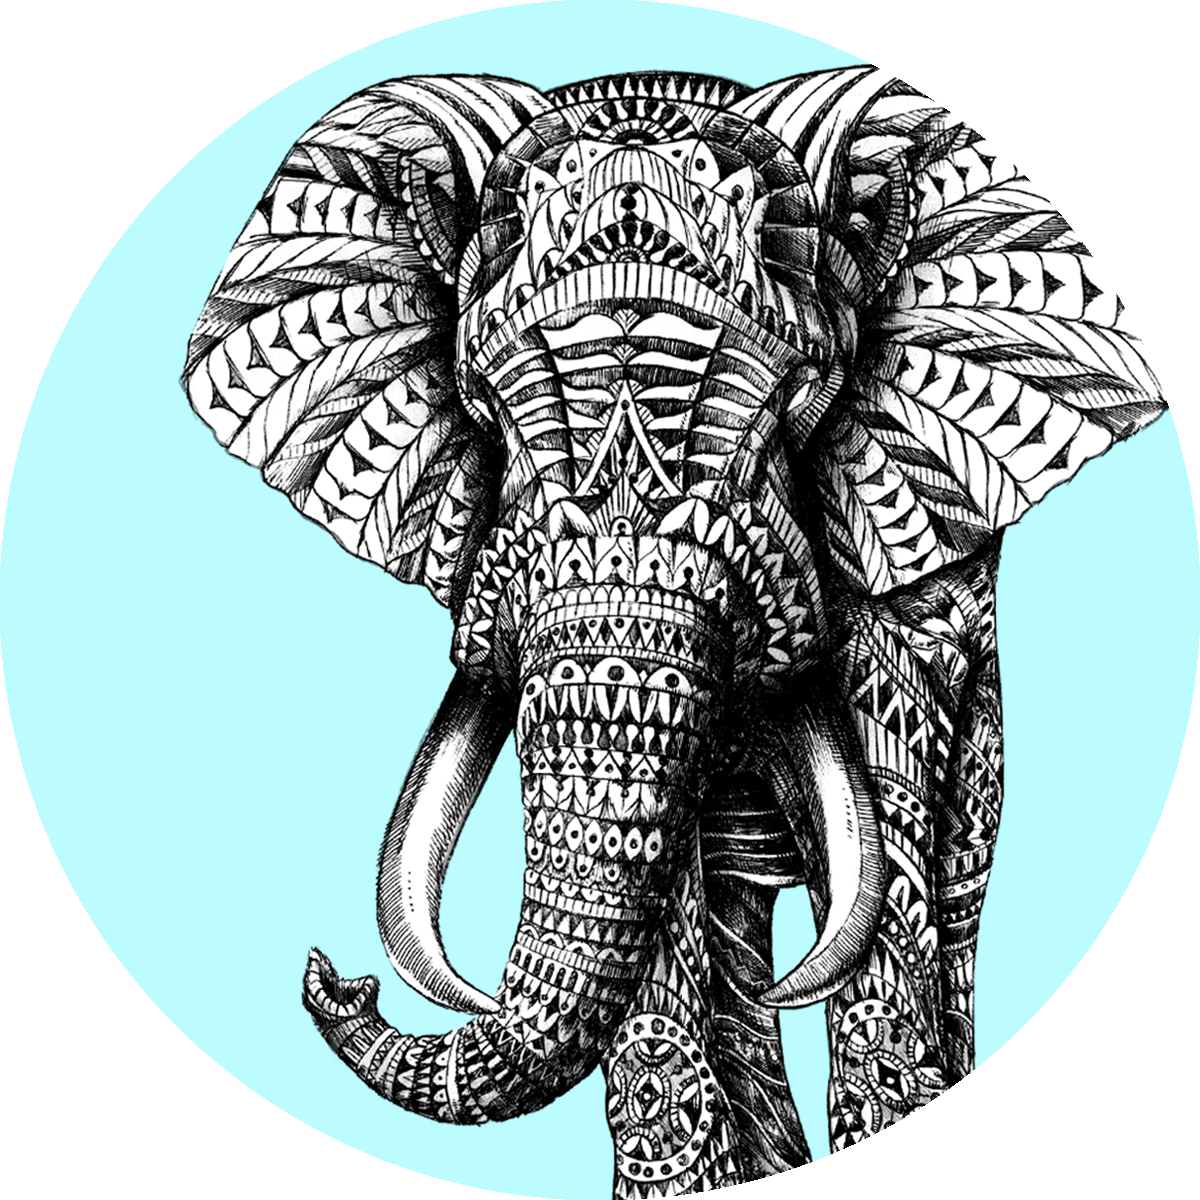 I'm All Ears (PopSockets x BIOWORKZ) "Save The Elephants" Charity